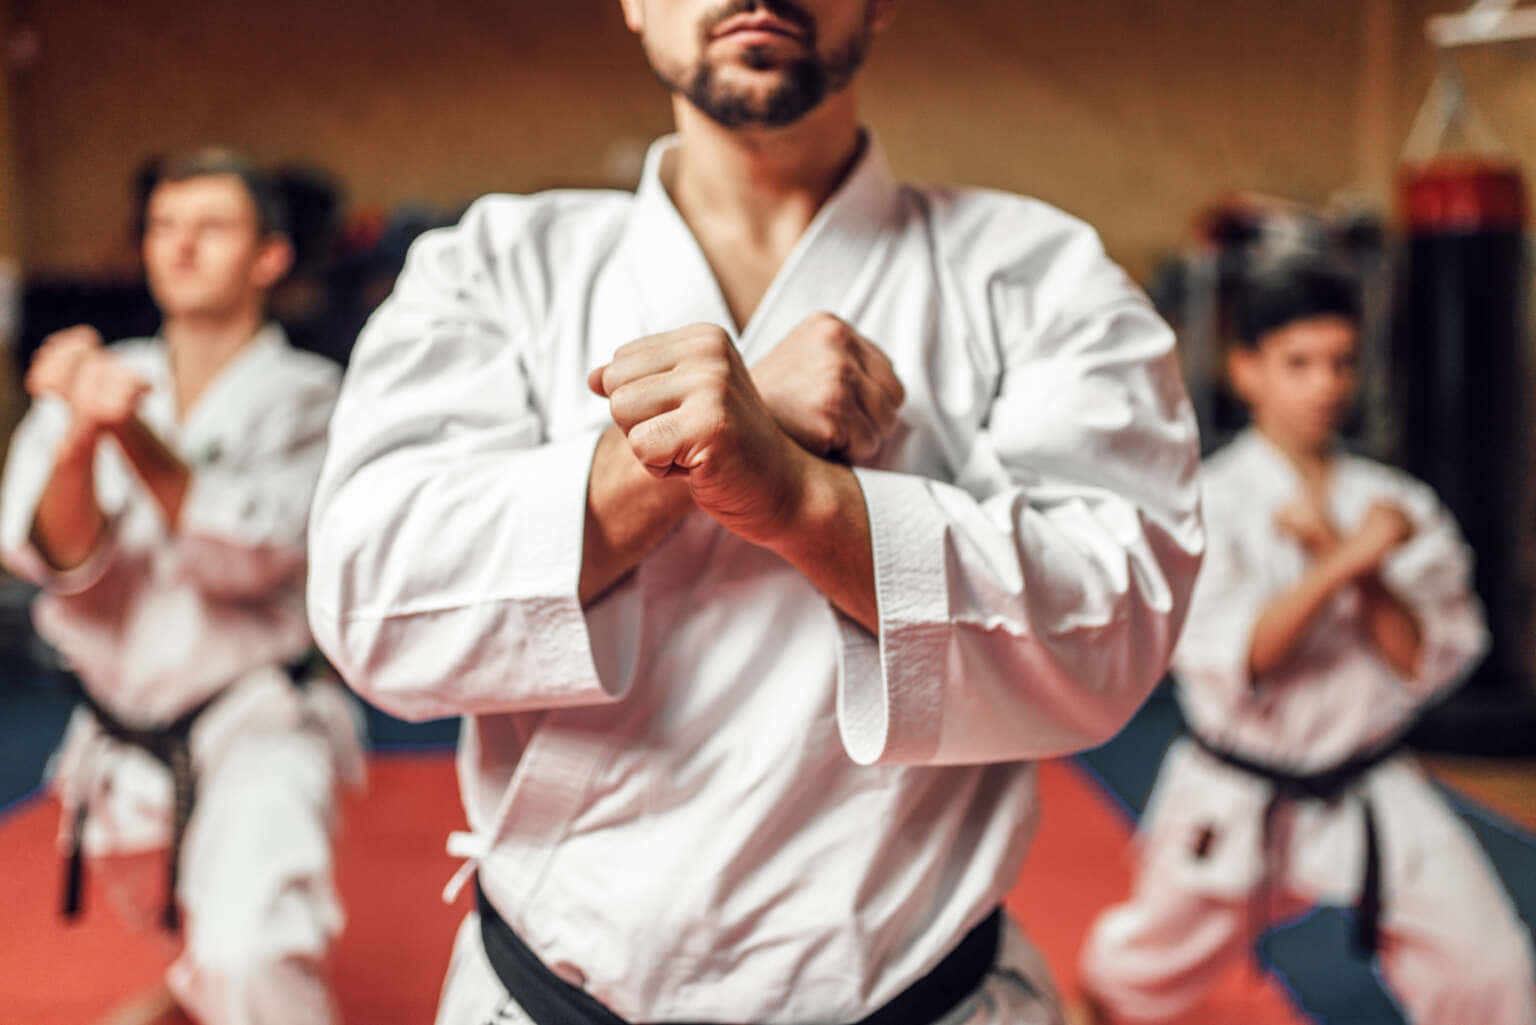 Martial artist wearing a crisp white uniform in action Wallpaper